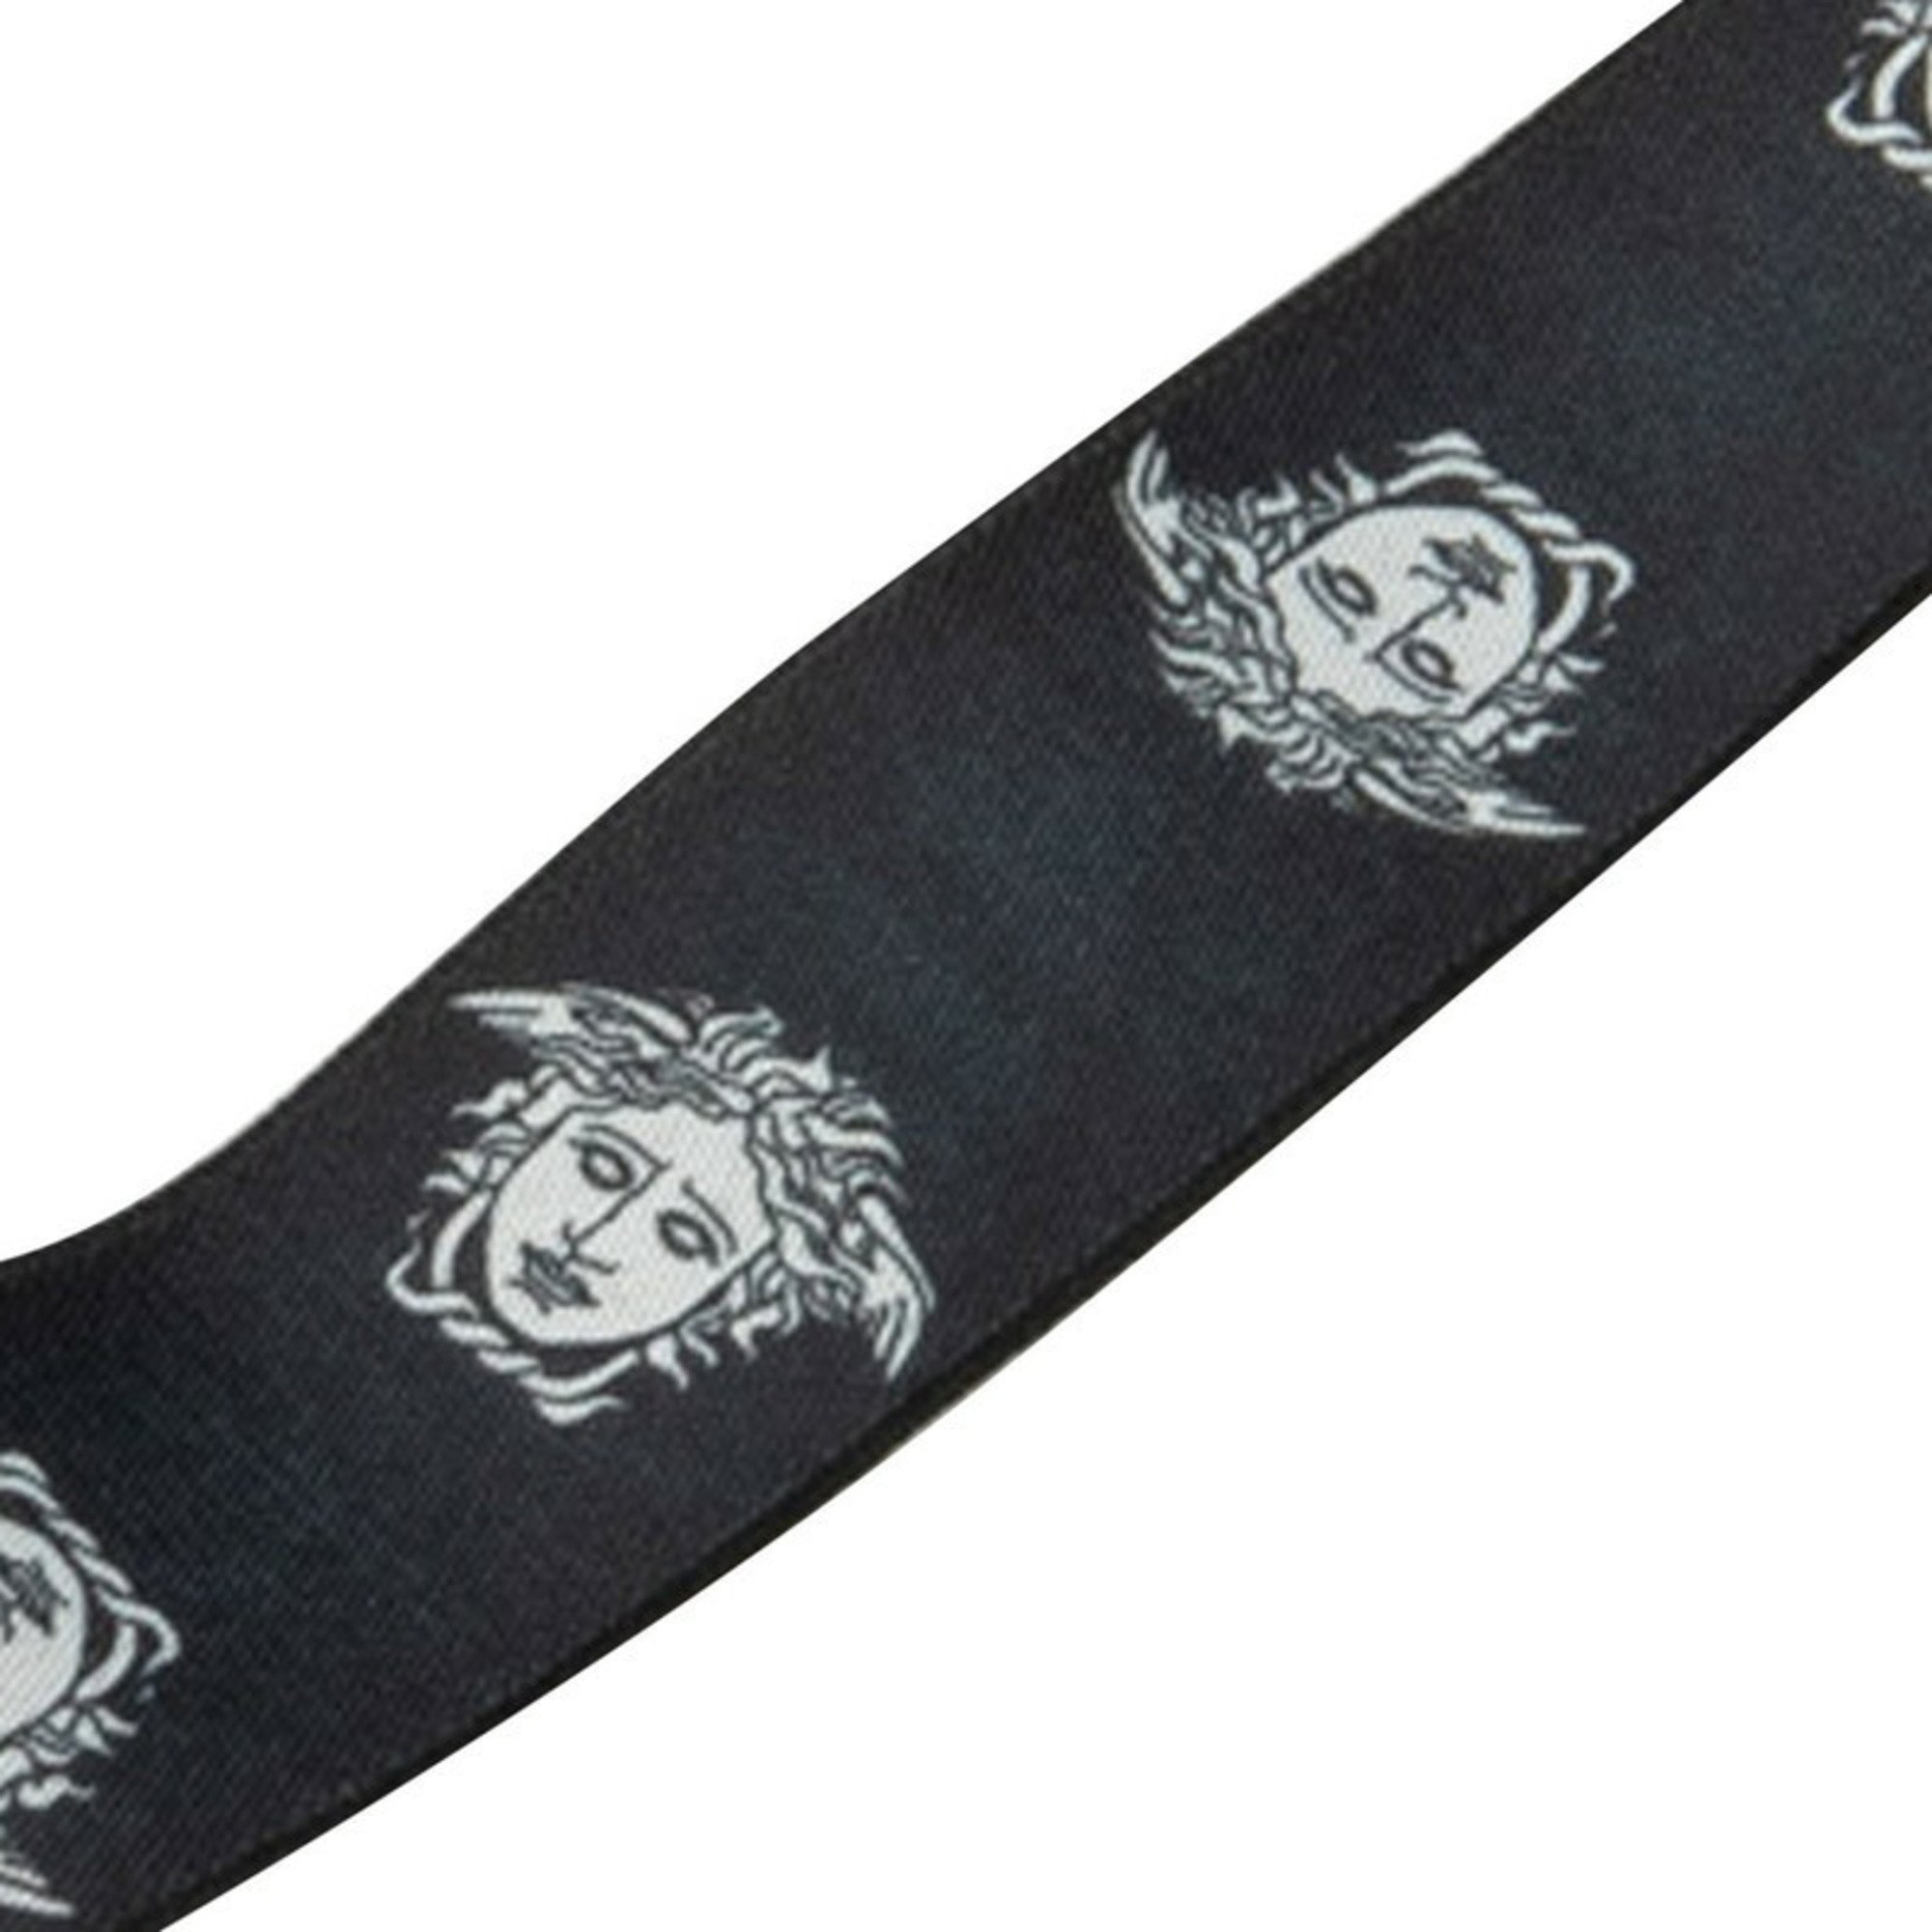 Versace Medusa motif suspenders, black, gold, silver, rubber, metal, plated, men's, VERSACE